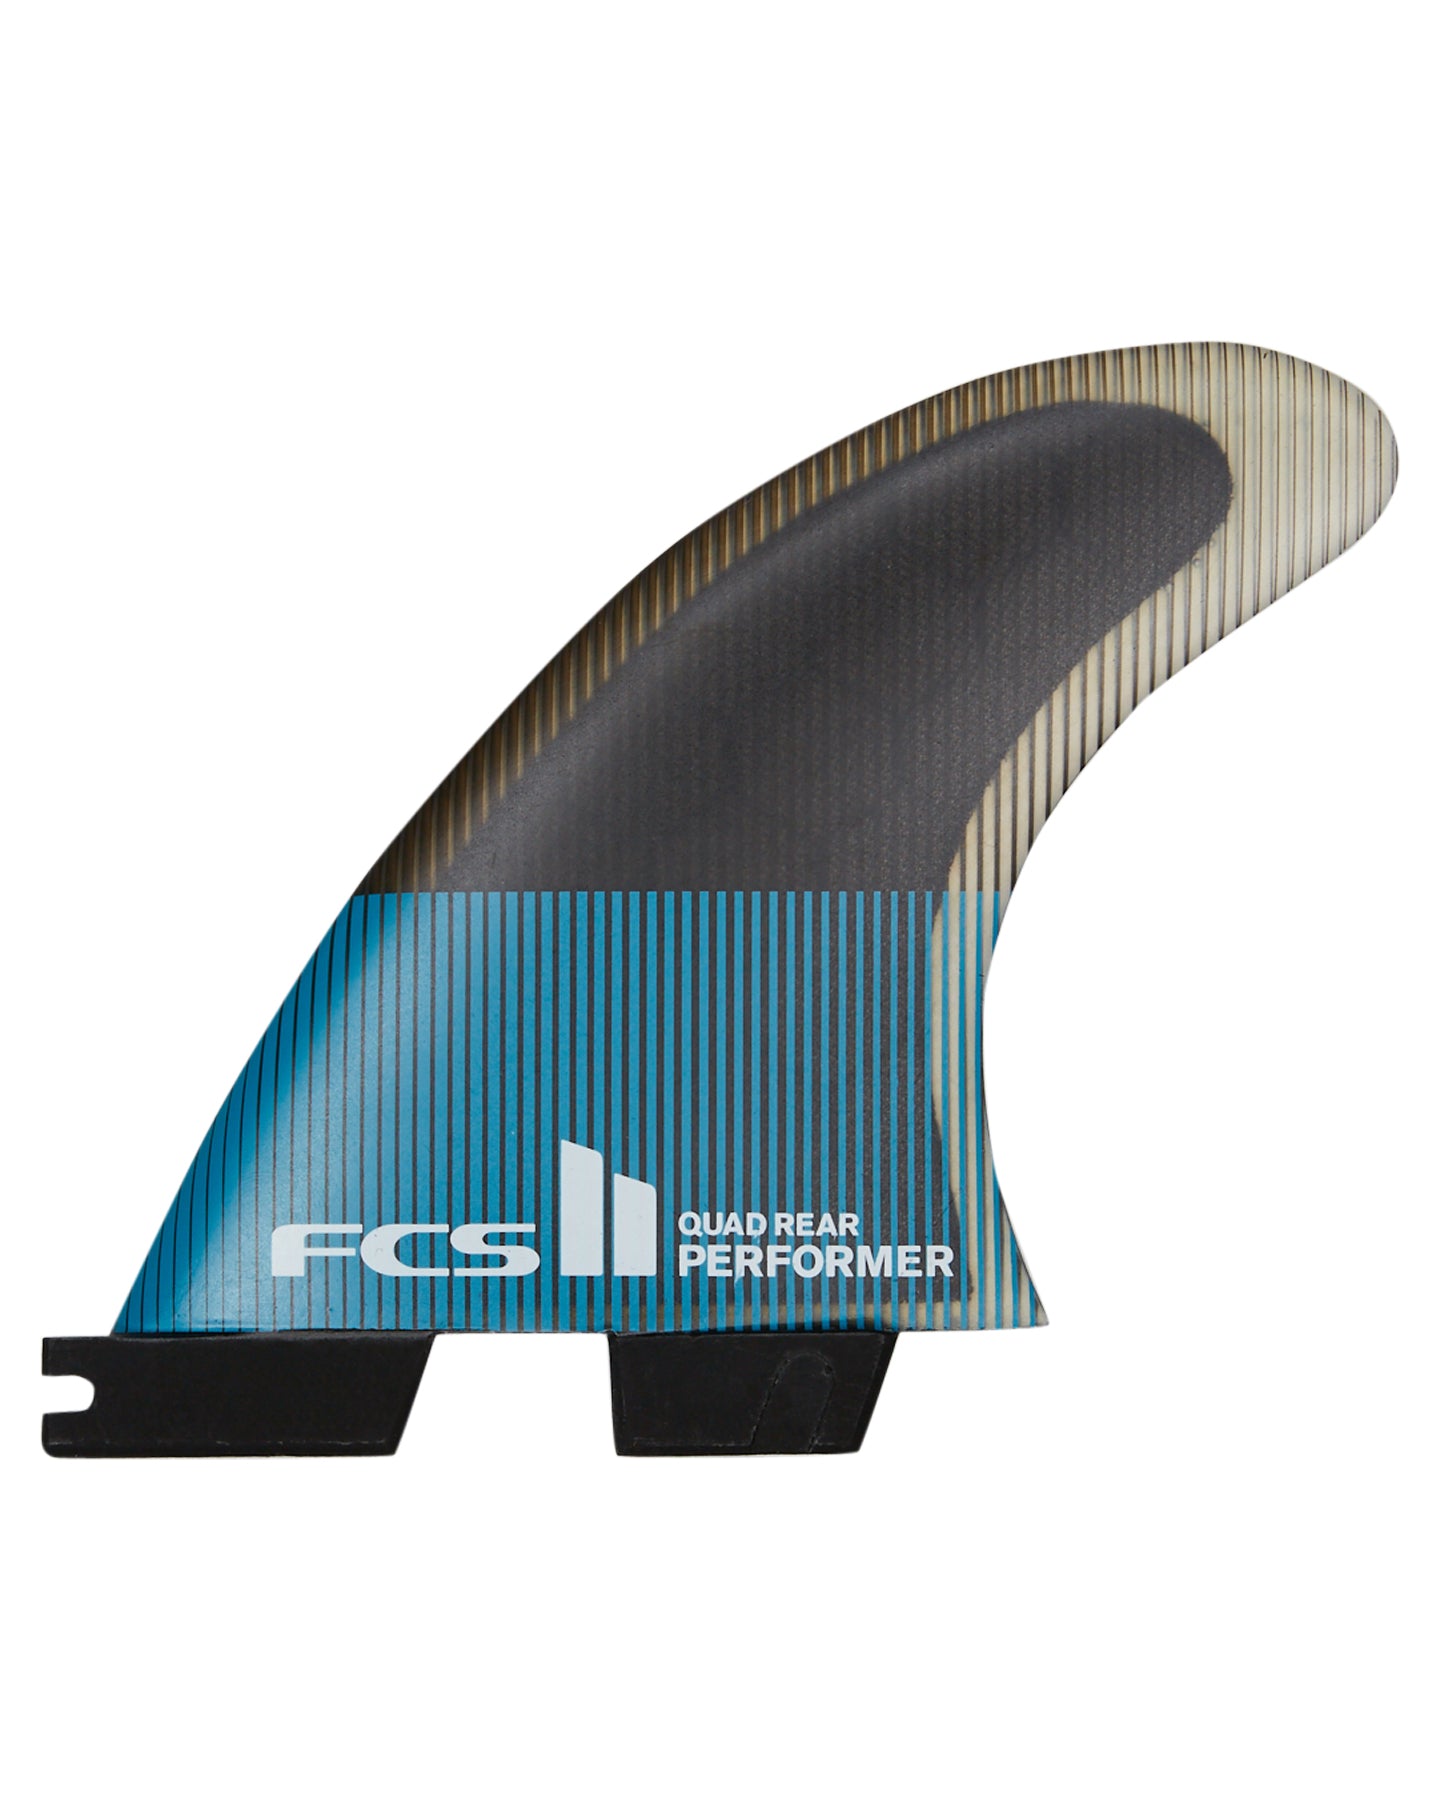 FCS 2 Performer PC Quad Rear Fins Teal-Black L